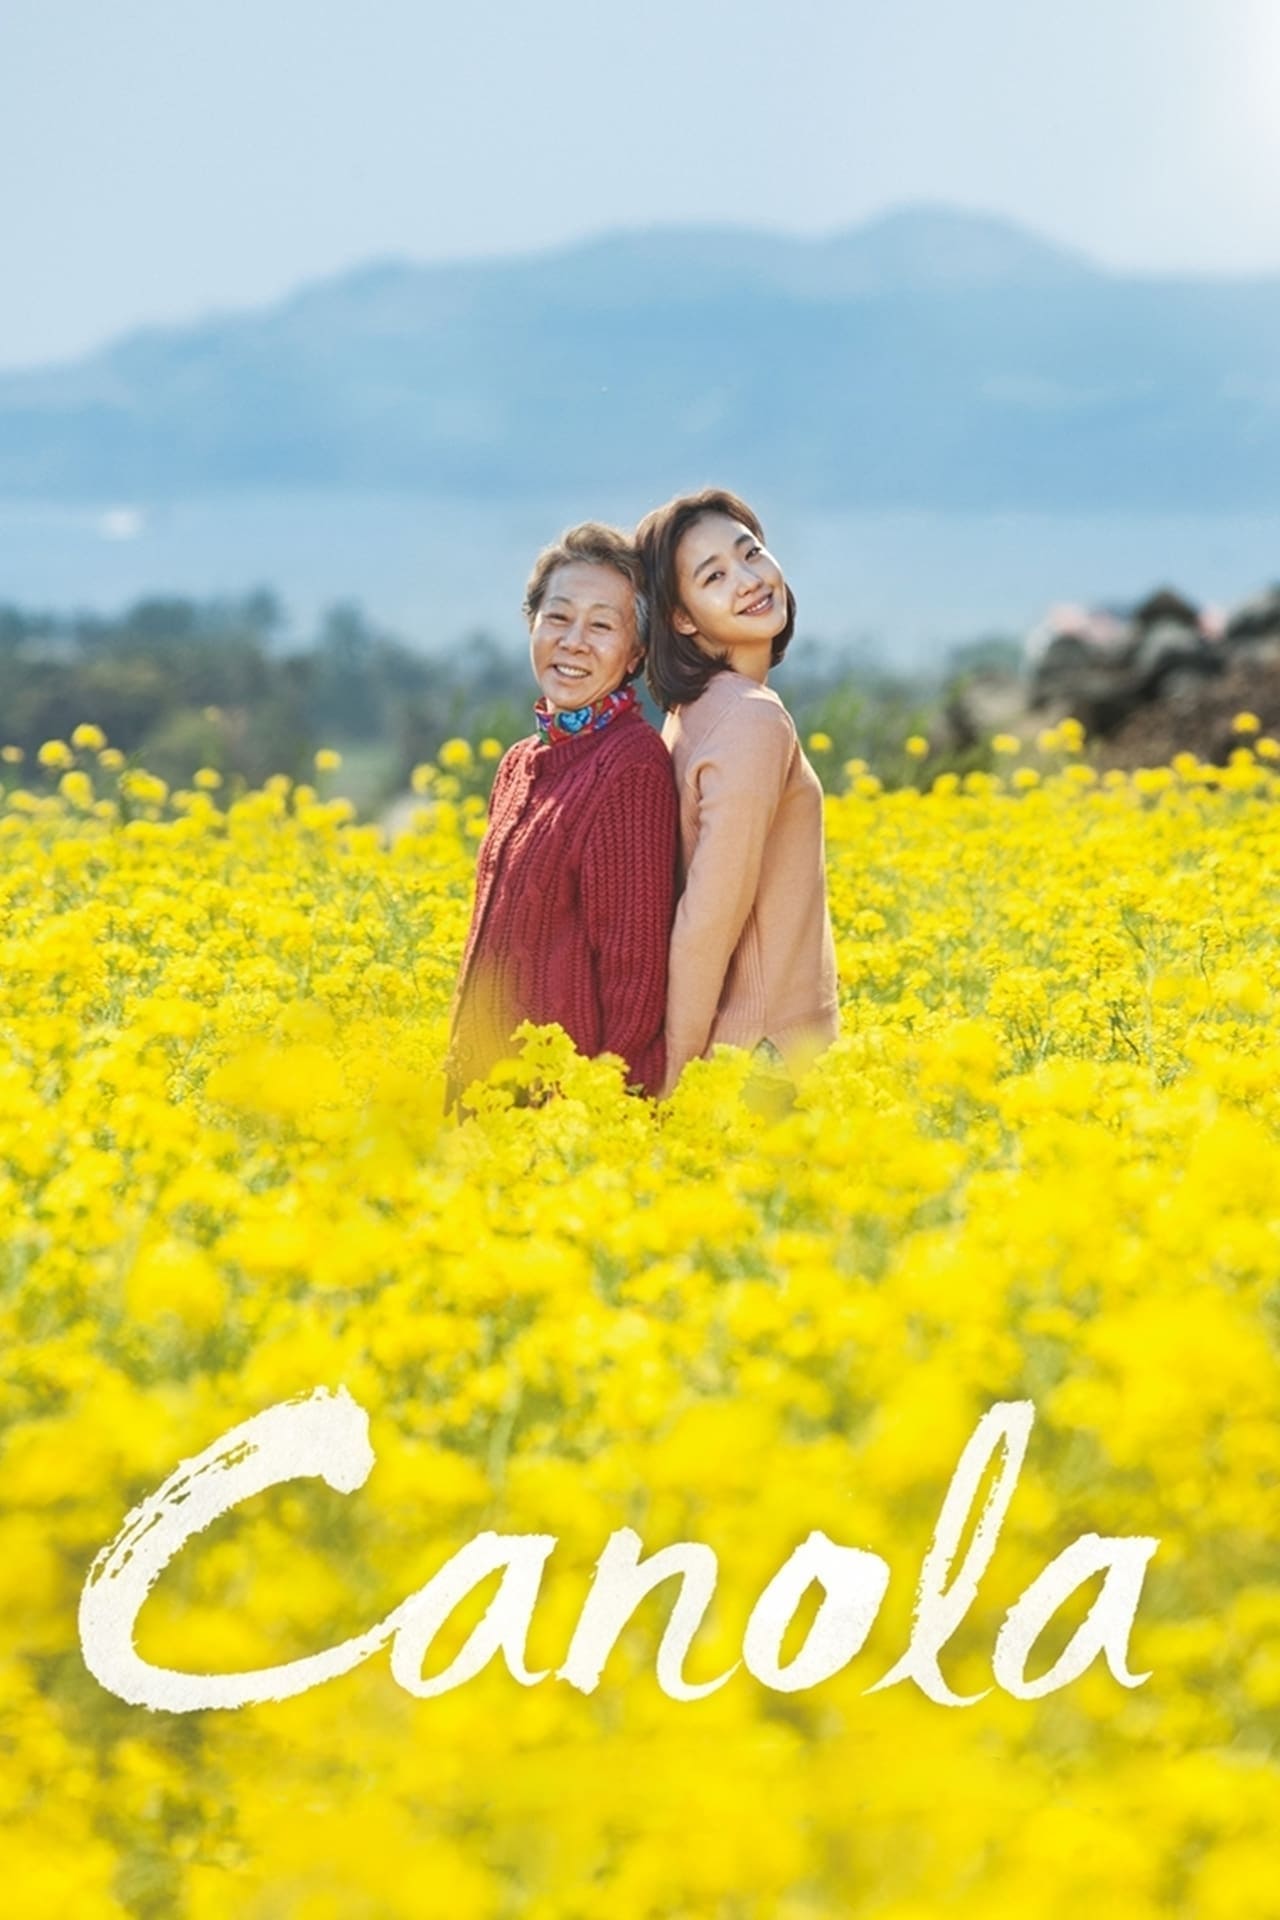 کانولا (Canola)